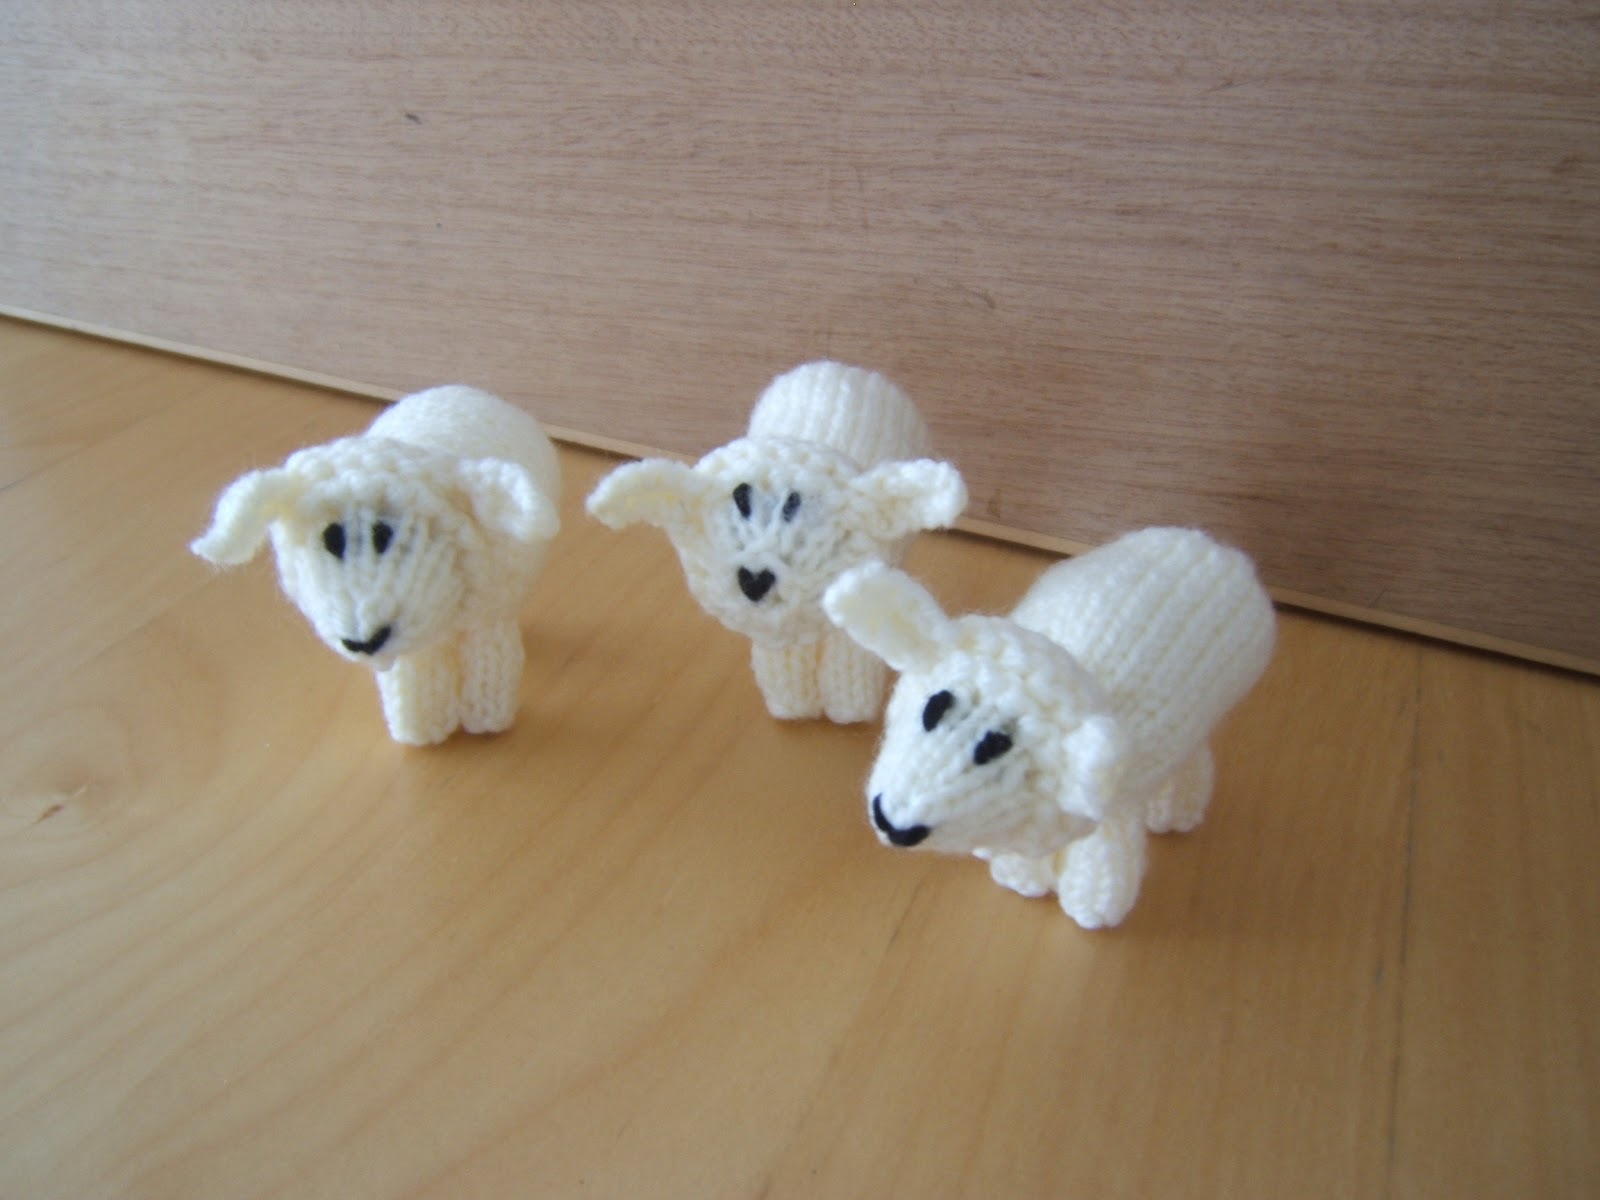 http://1.bp.blogspot.com/-o5Fr6xA6vK8/UFDYT_VLbbI/AAAAAAAAAm8/F8Y_VzSPaz8/s1600/Knitted+Sheep+06.jpg